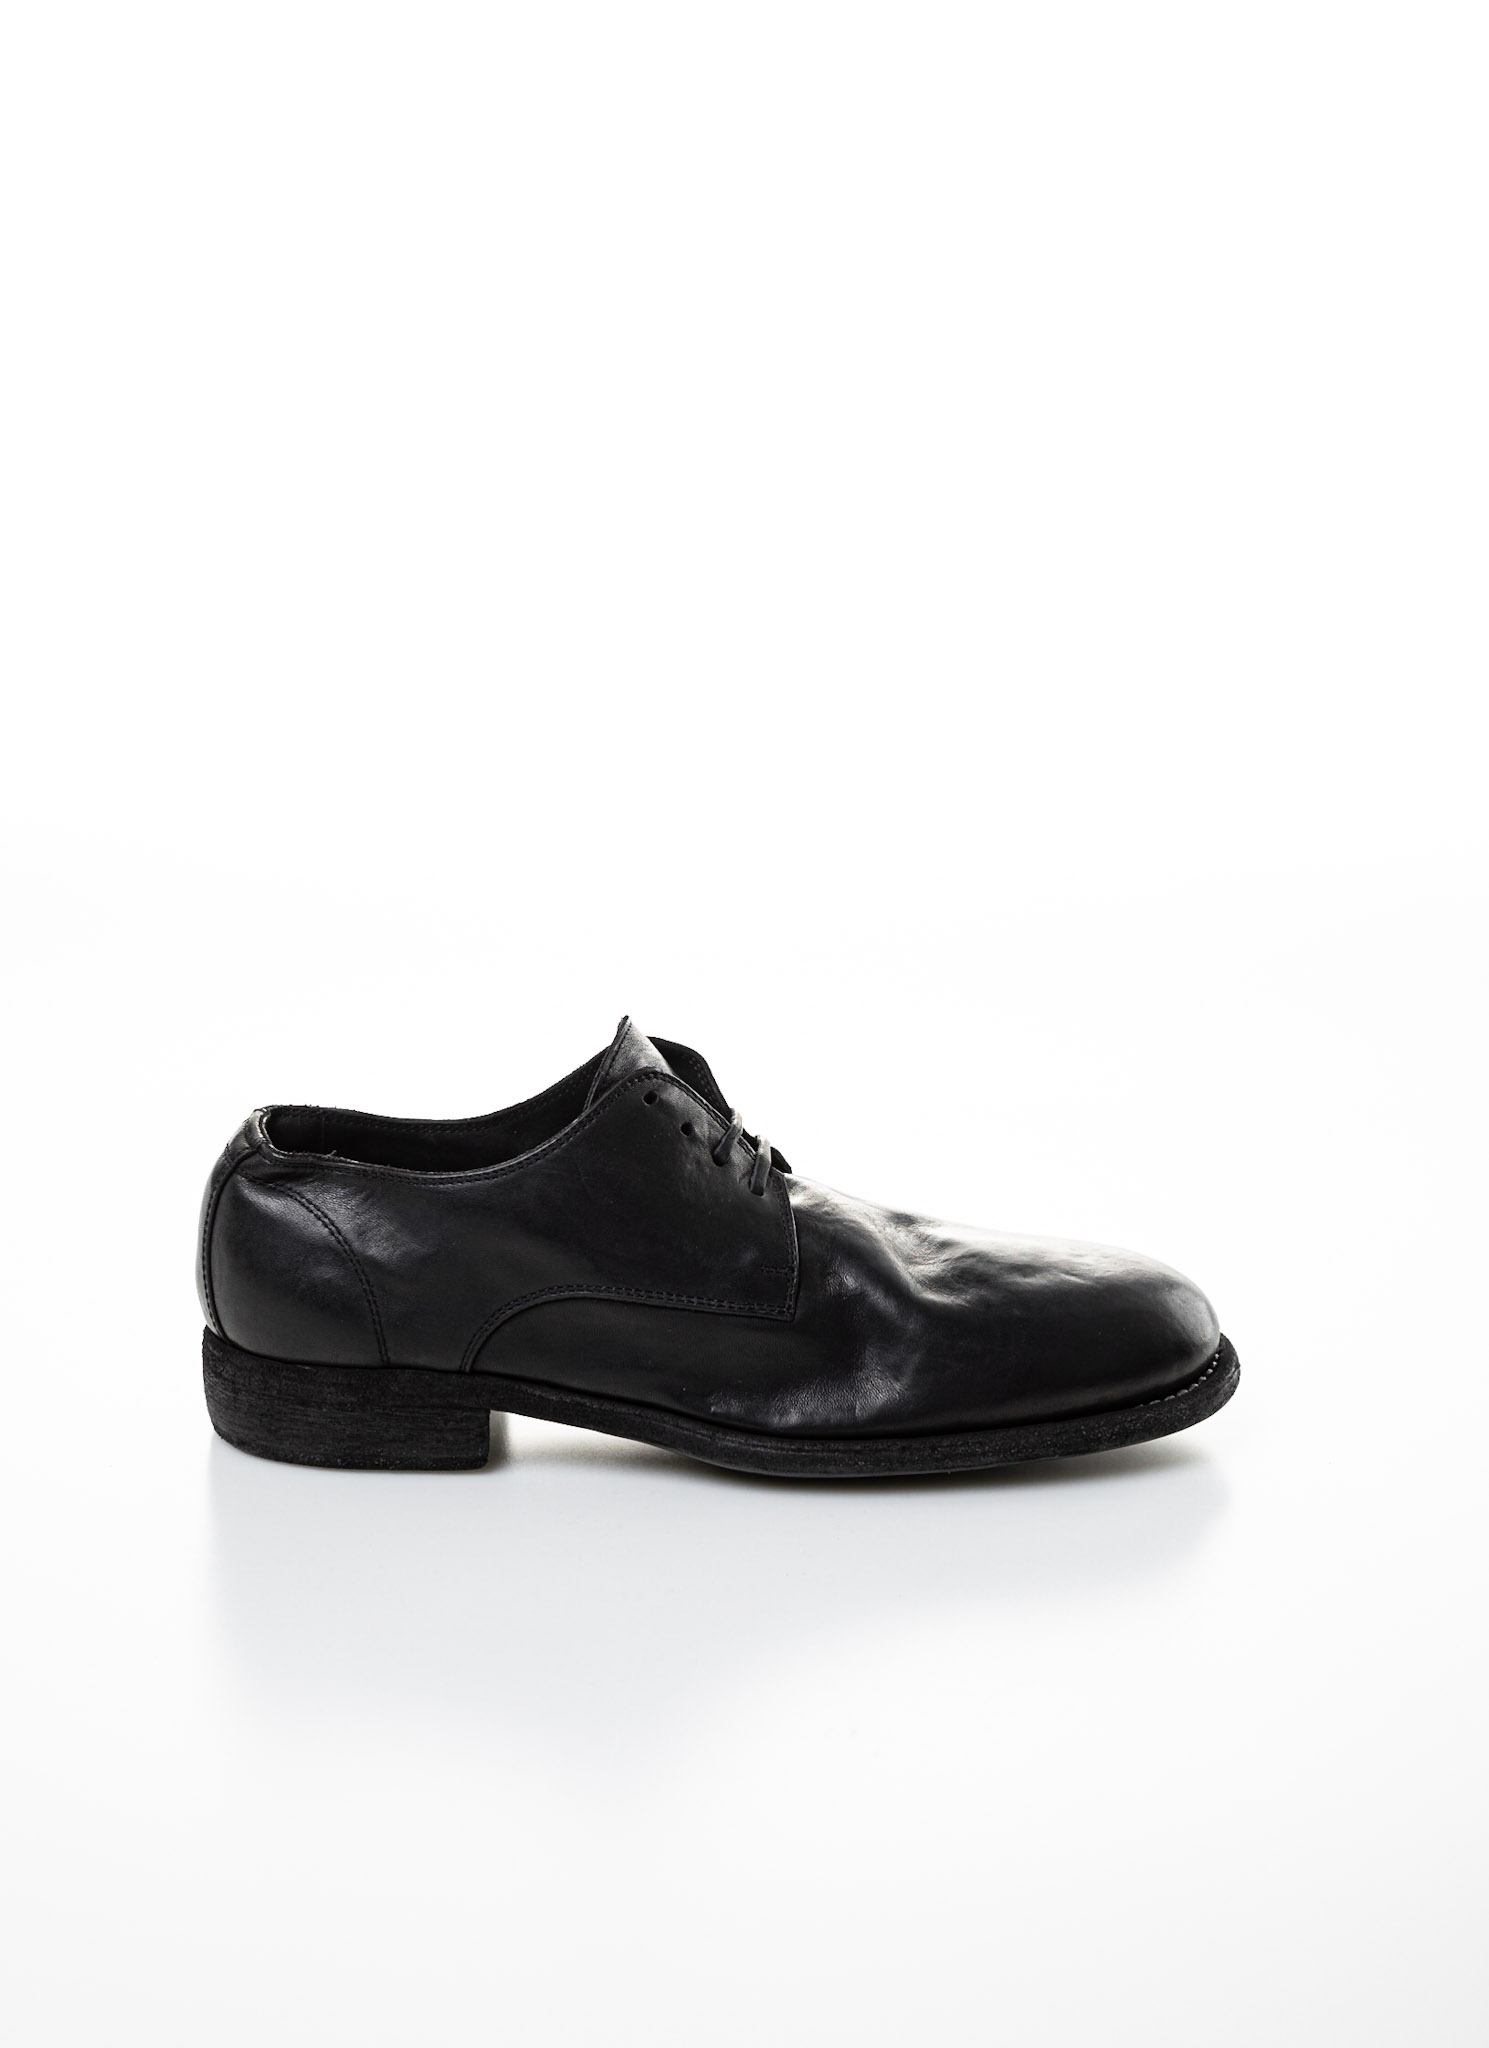 hide-m | GUIDI 992, Classic Derby Shoe black horse leather